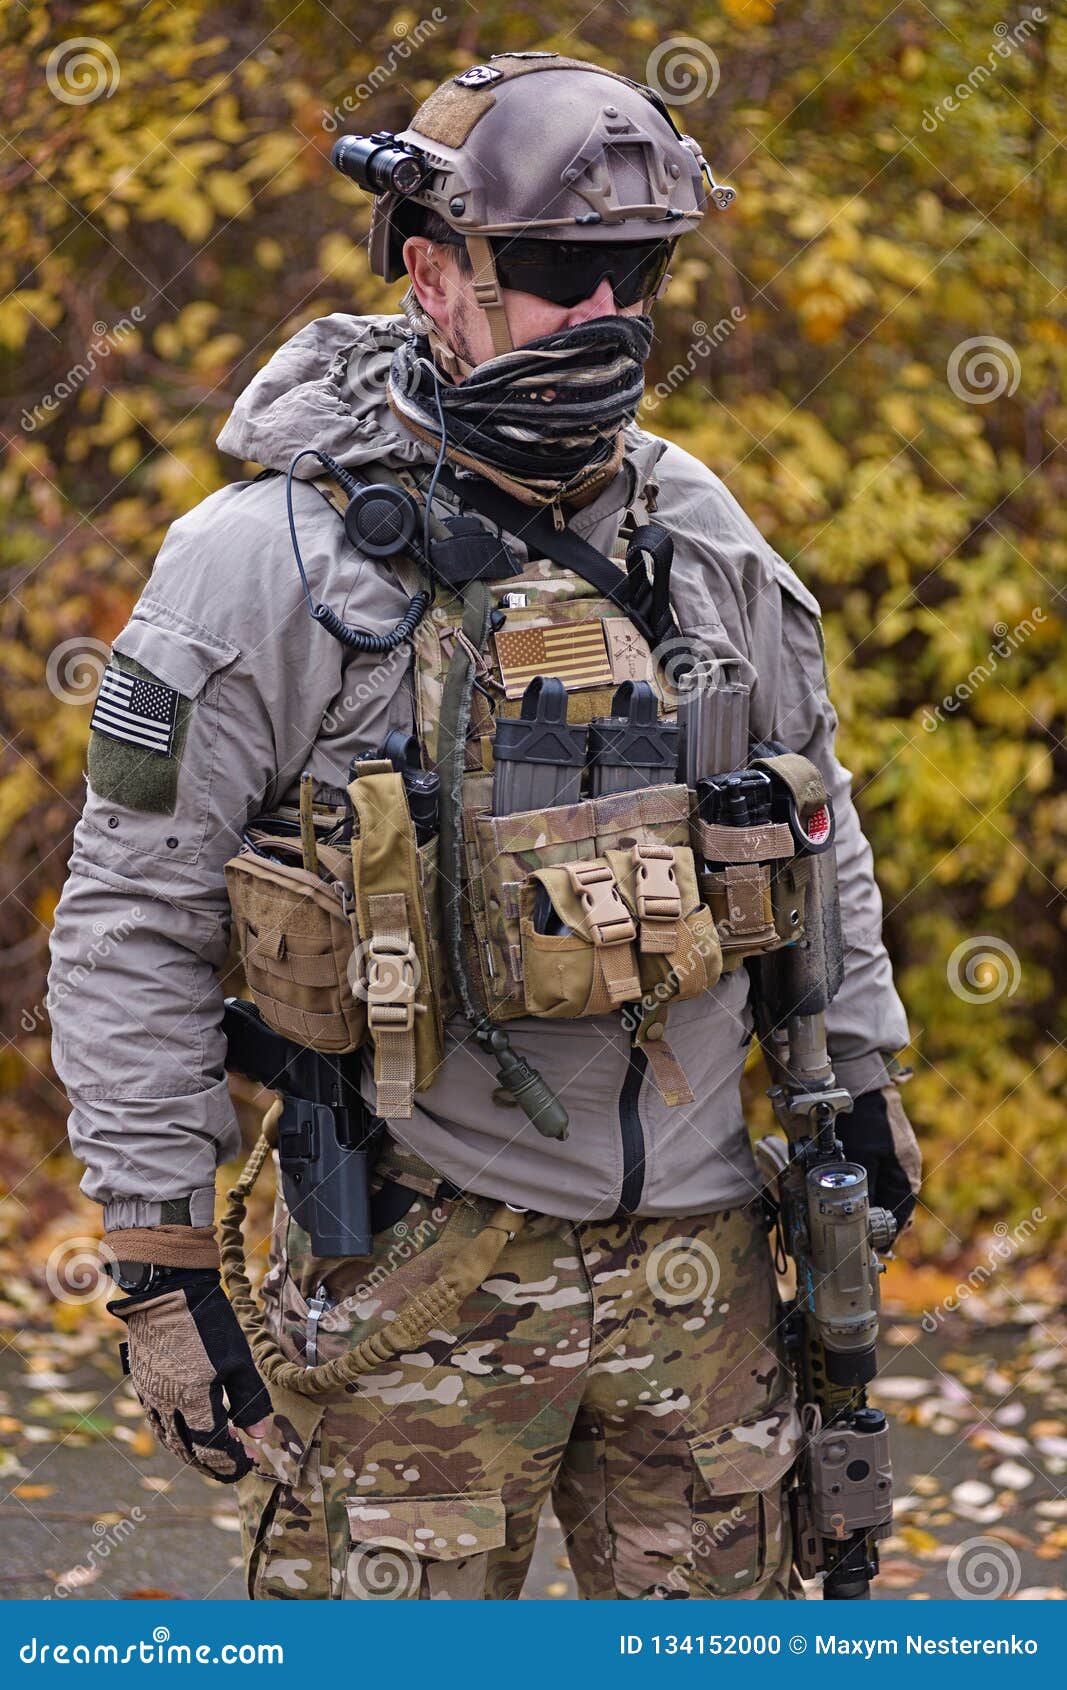 modern militia uniforms